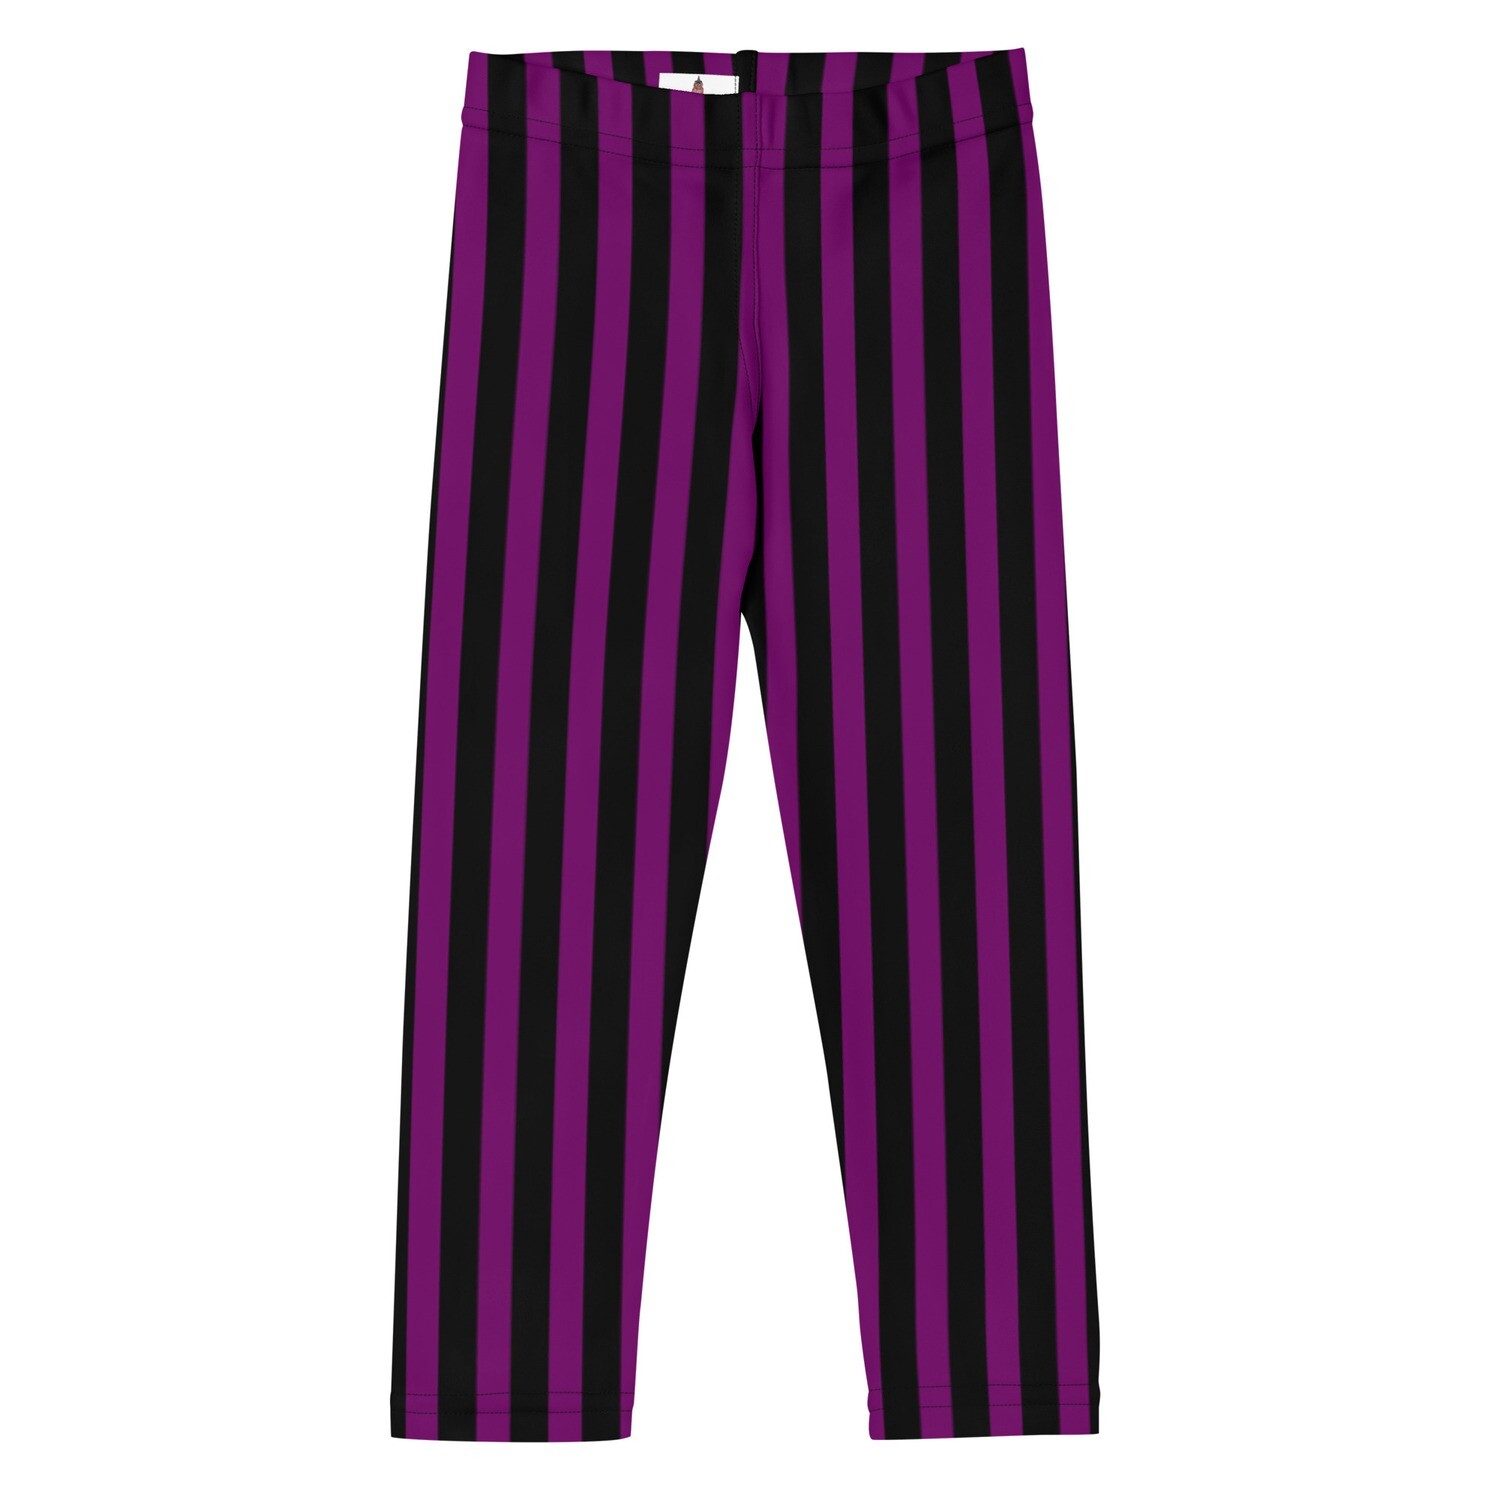 Purple and Black Striped Kid's Leggings